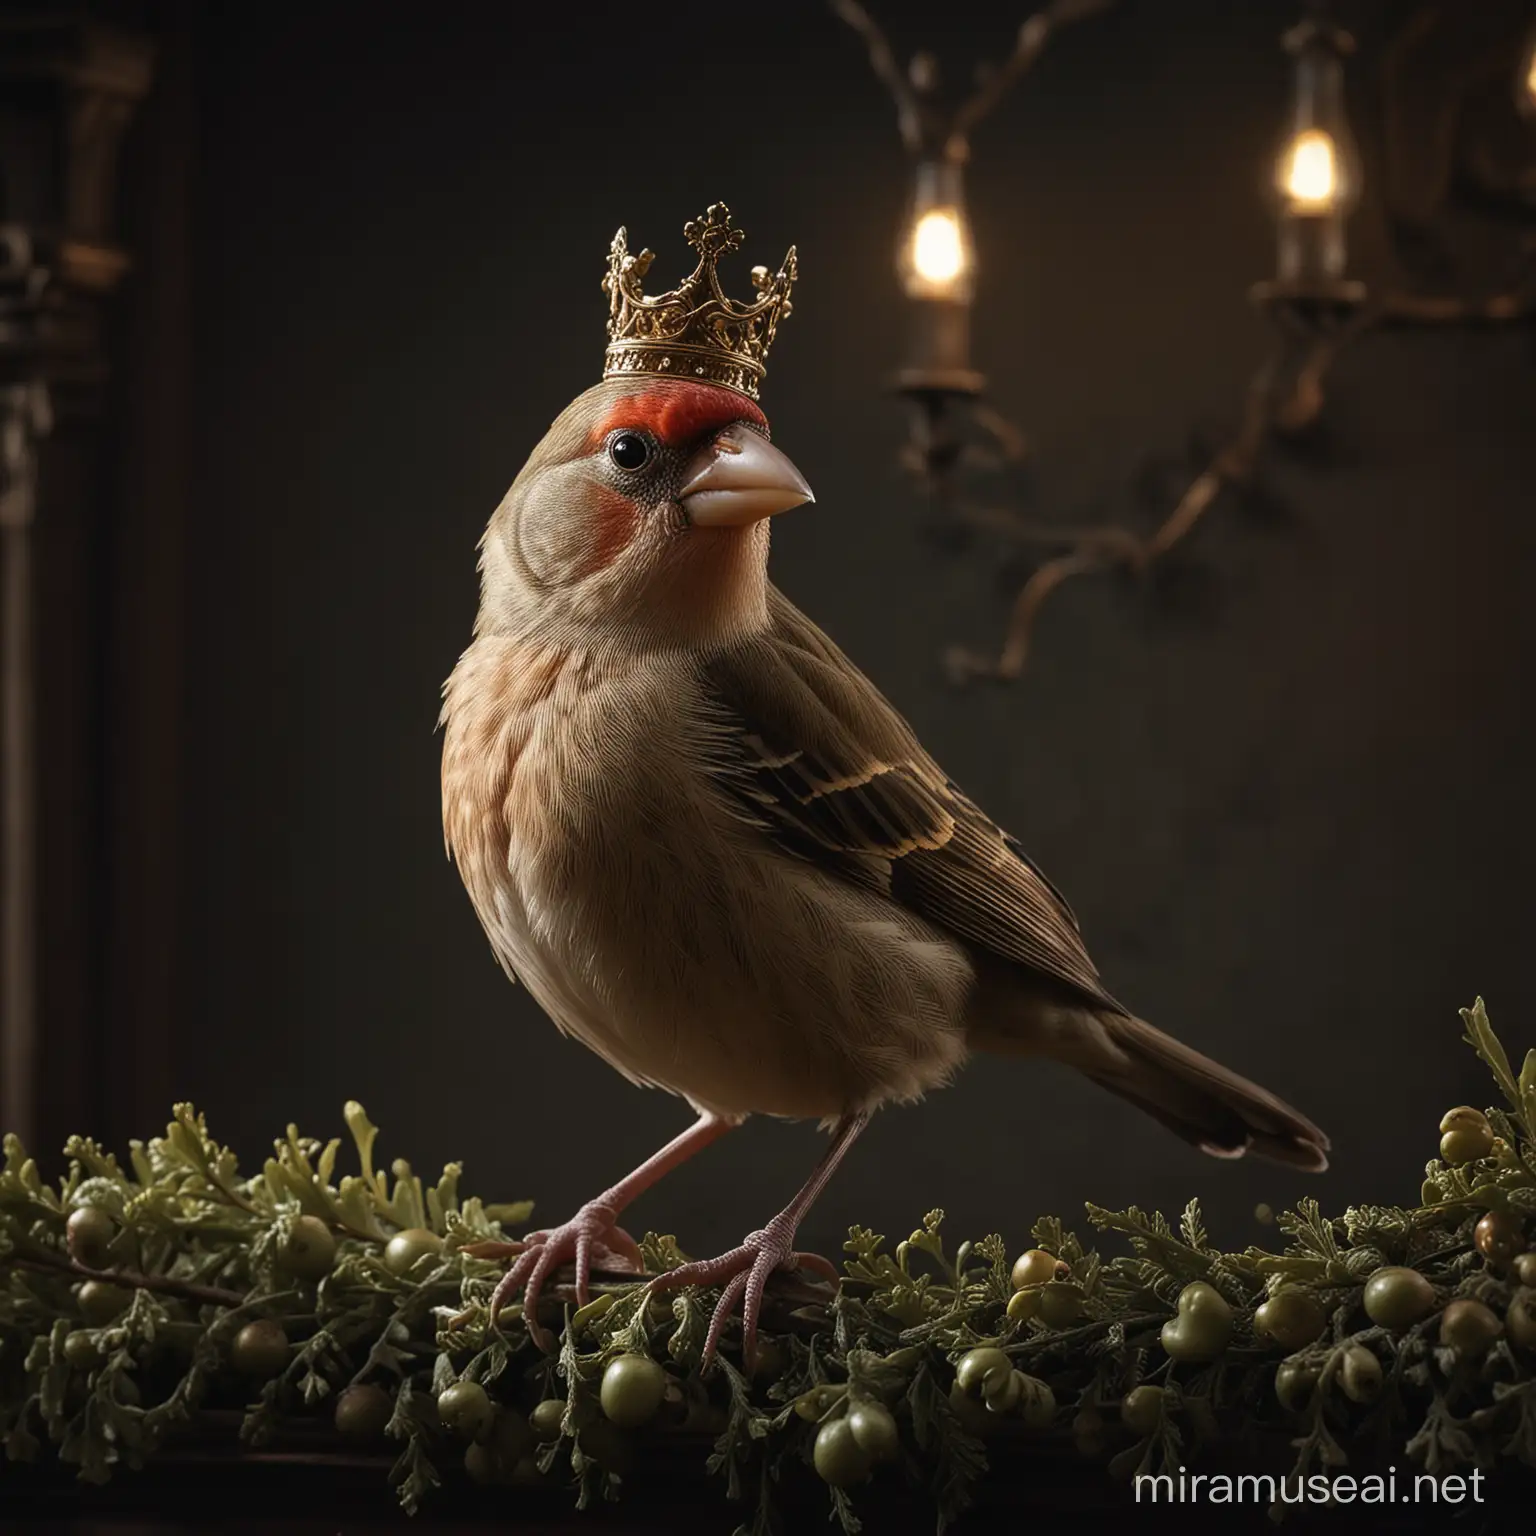 Regal Finch Wearing Vintage Crown in Neonlit Environment